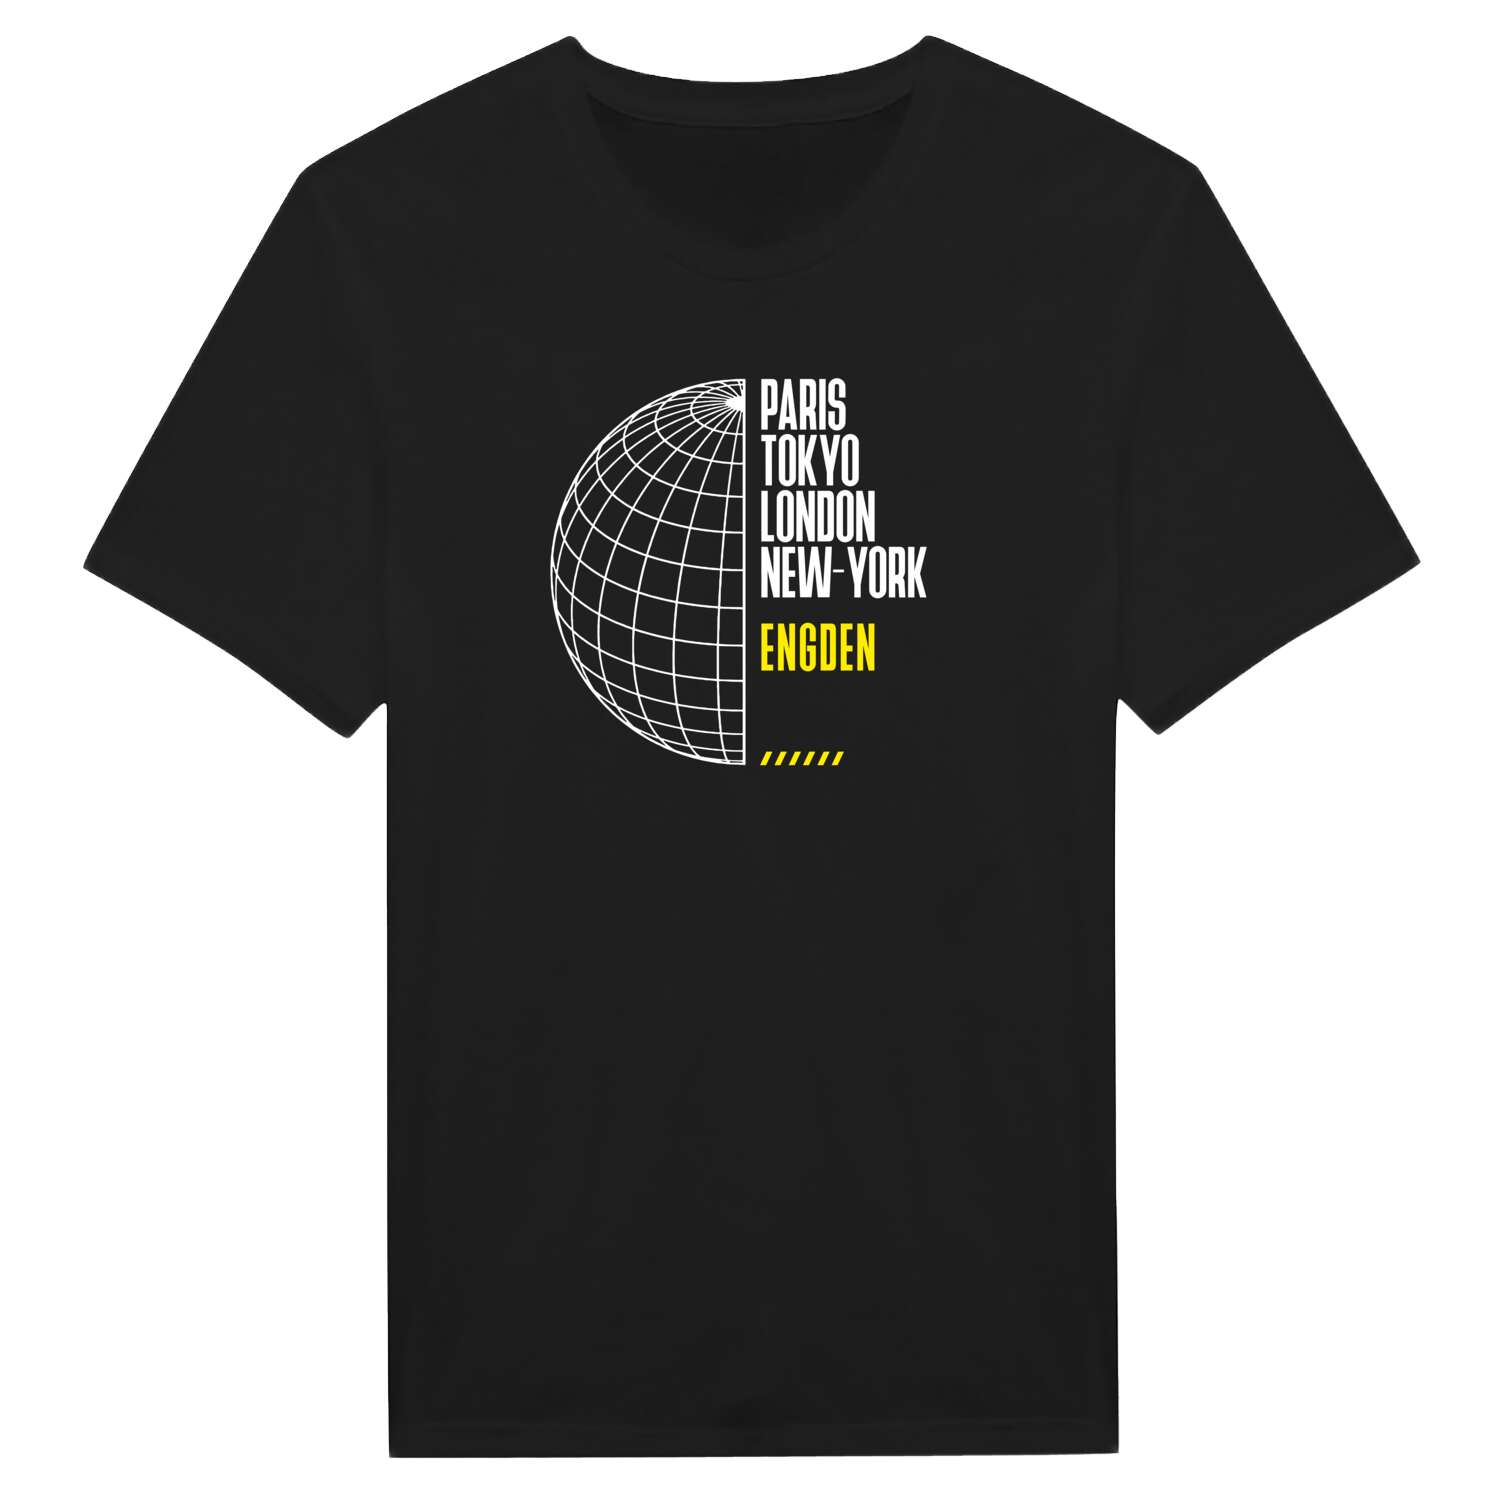 Engden T-Shirt »Paris Tokyo London«